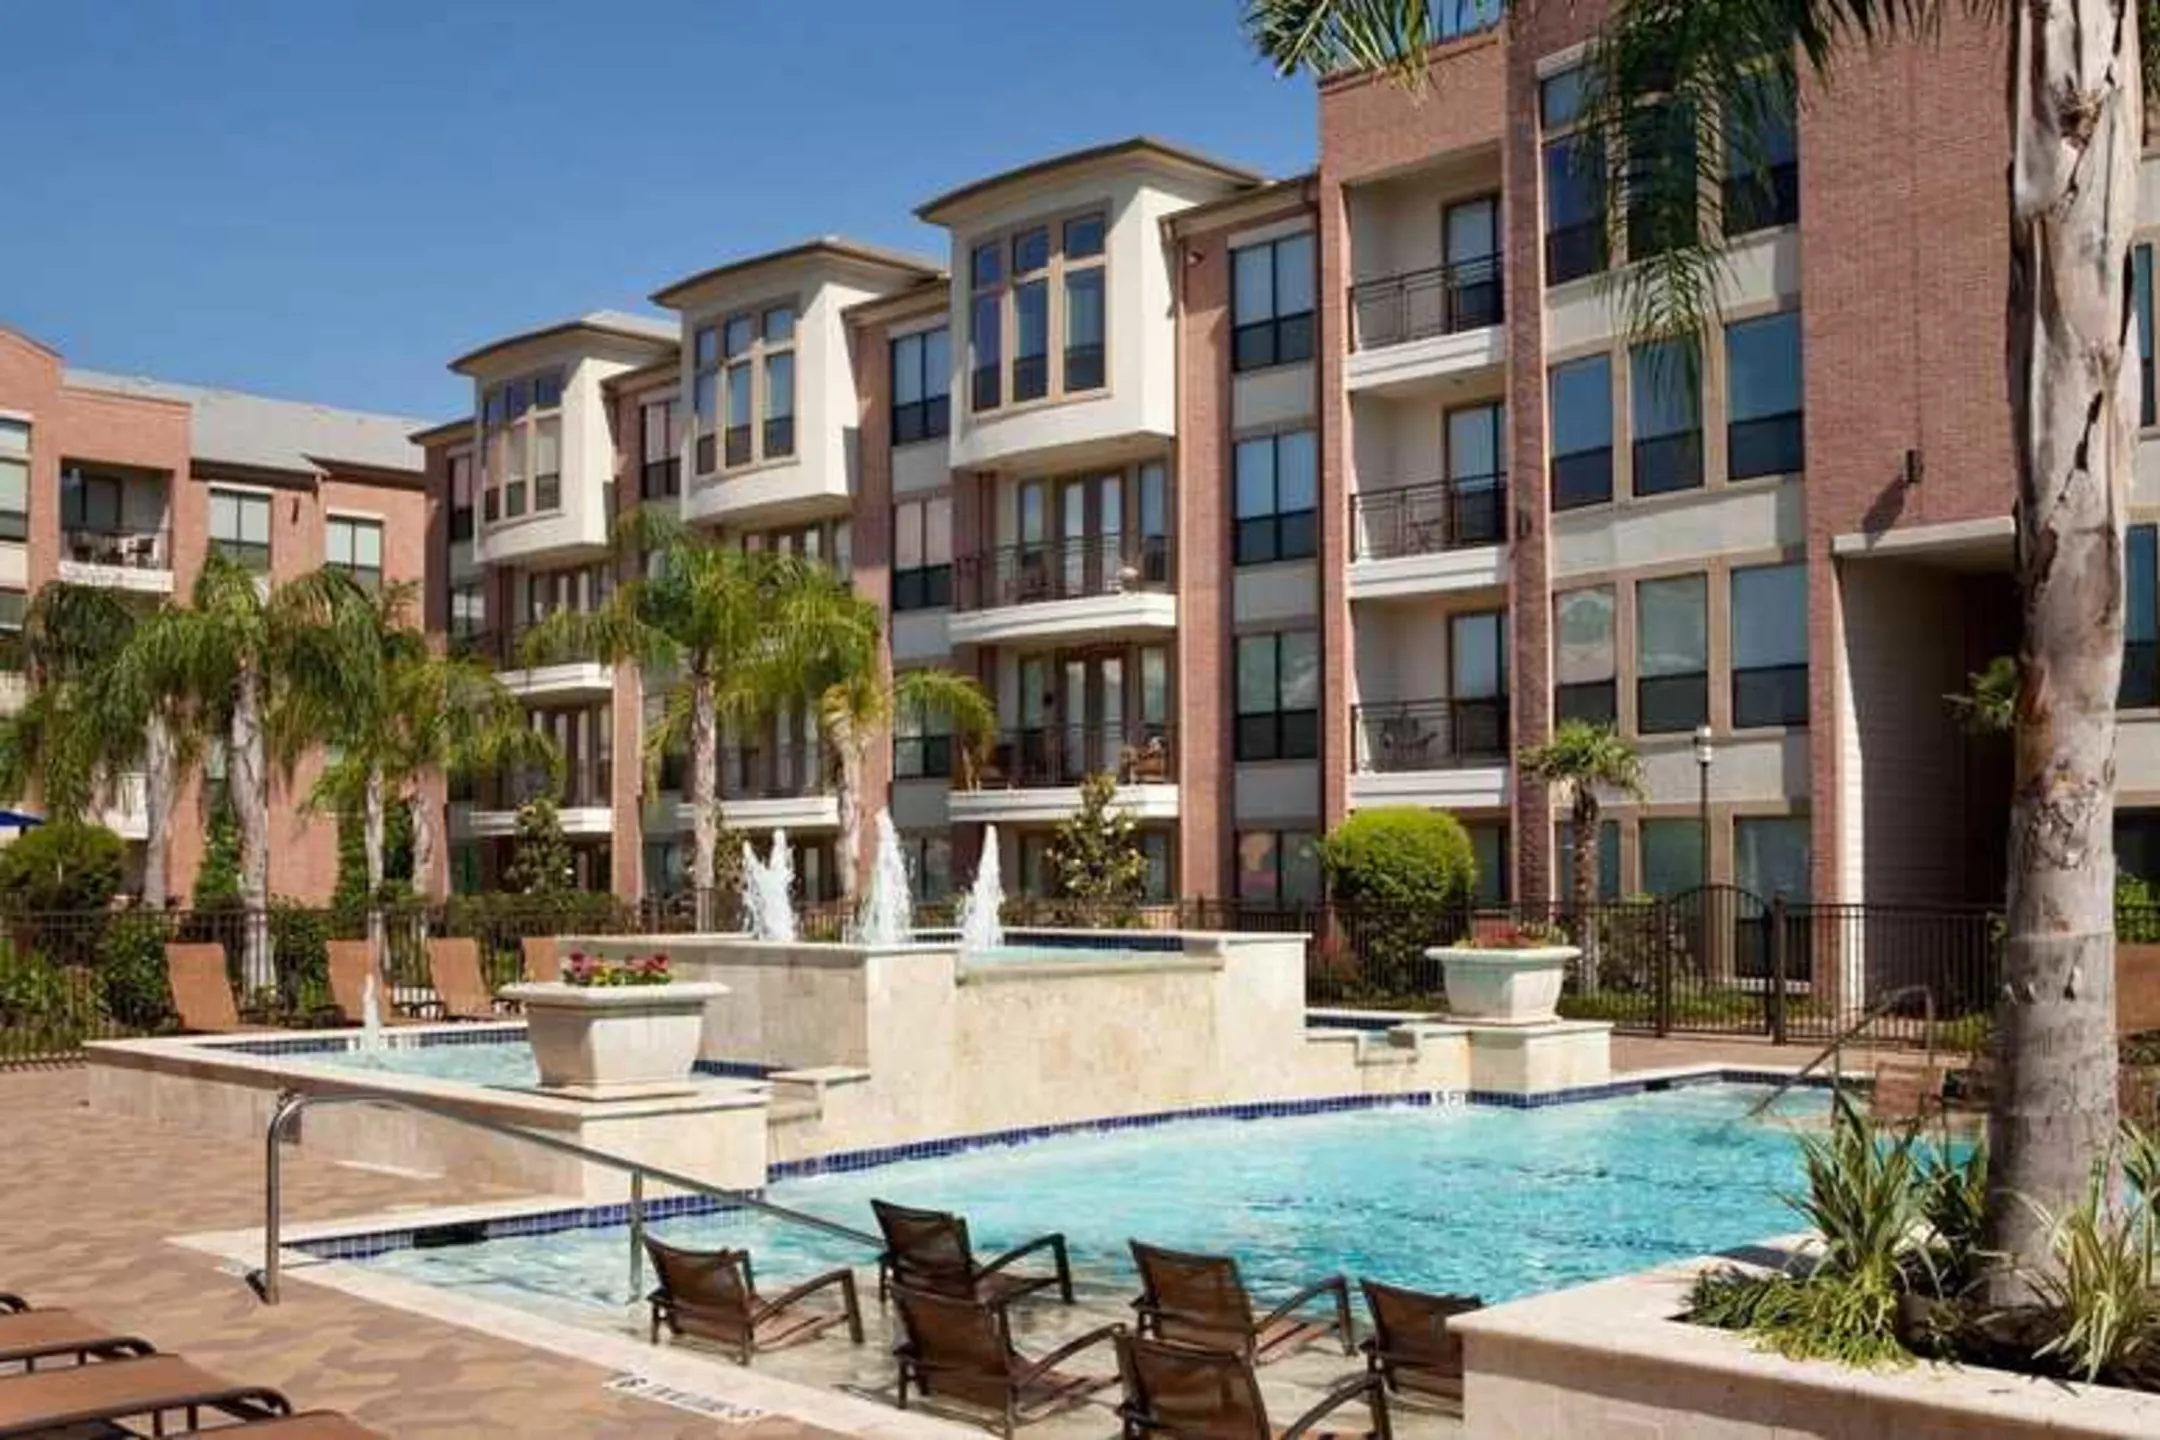 Pool - 77061 Luxury Properties - Houston, TX